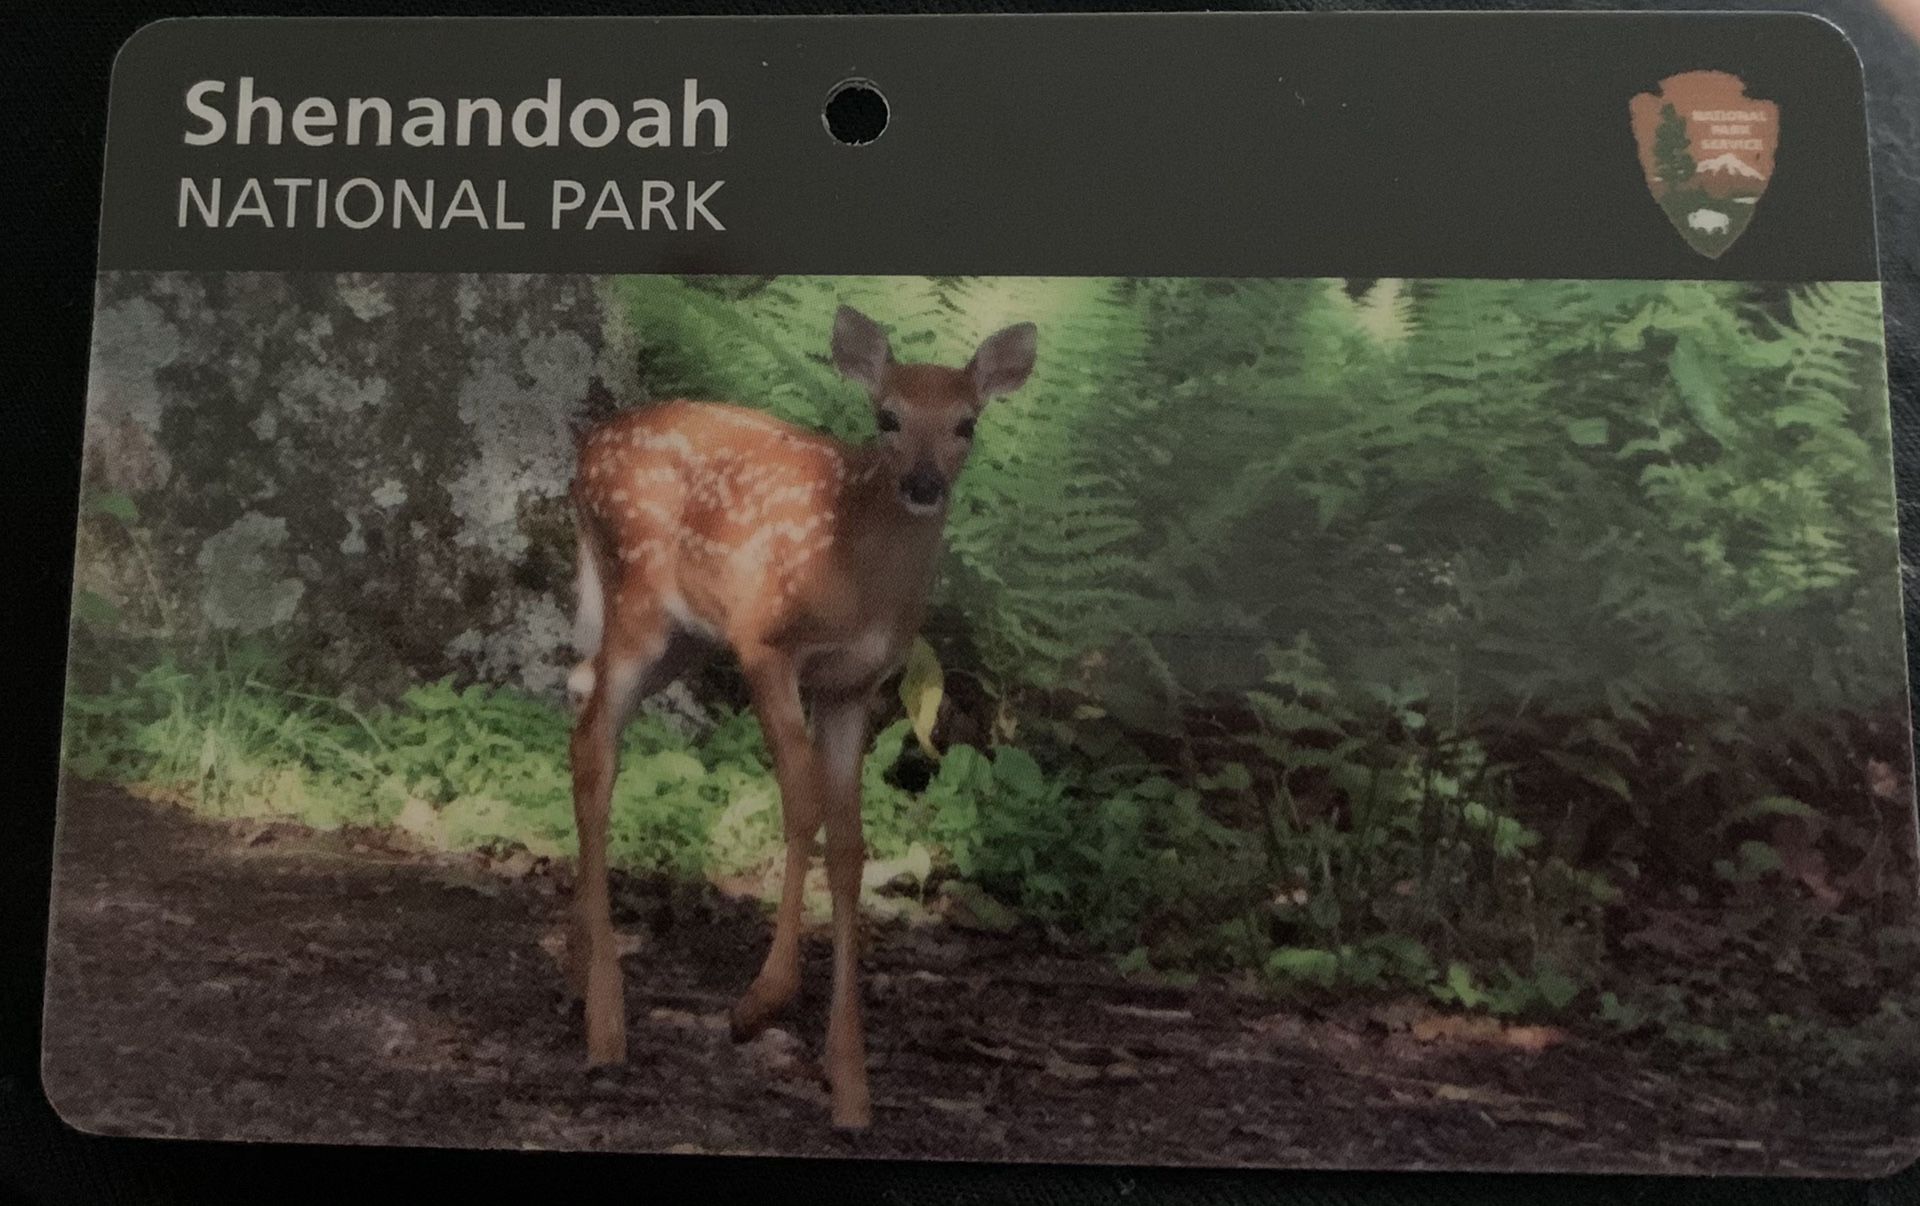 Shenandoah National Park Annual Pass valid till Aug 2021